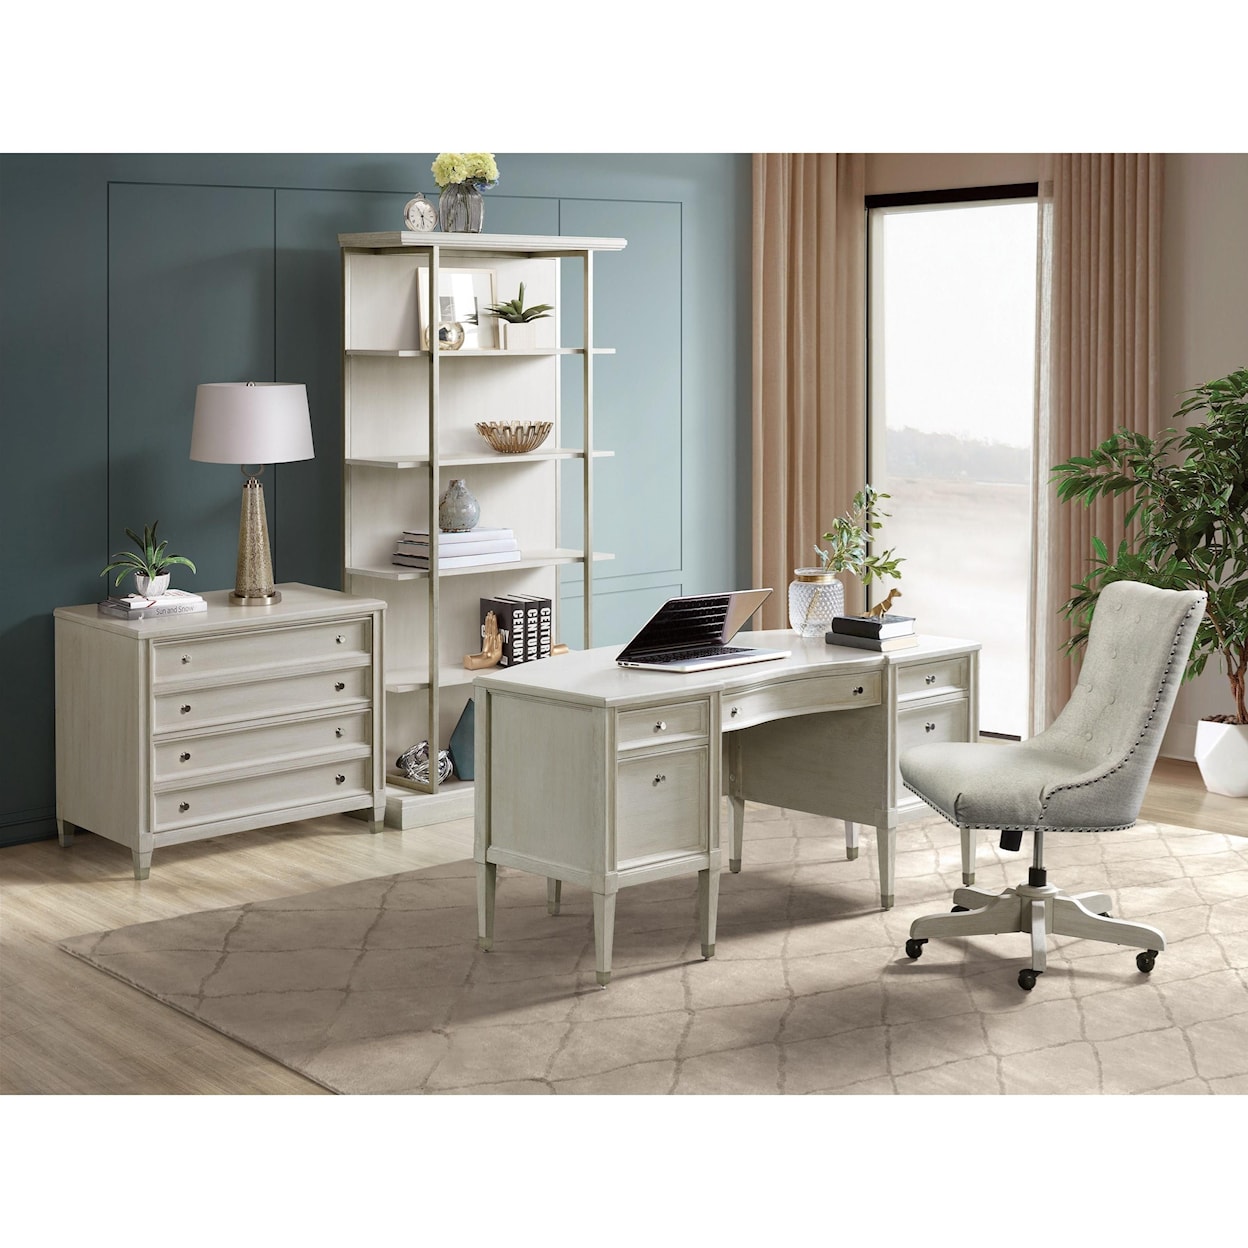 Riverside Furniture Maisie Adjustable Swivel Desk Chair